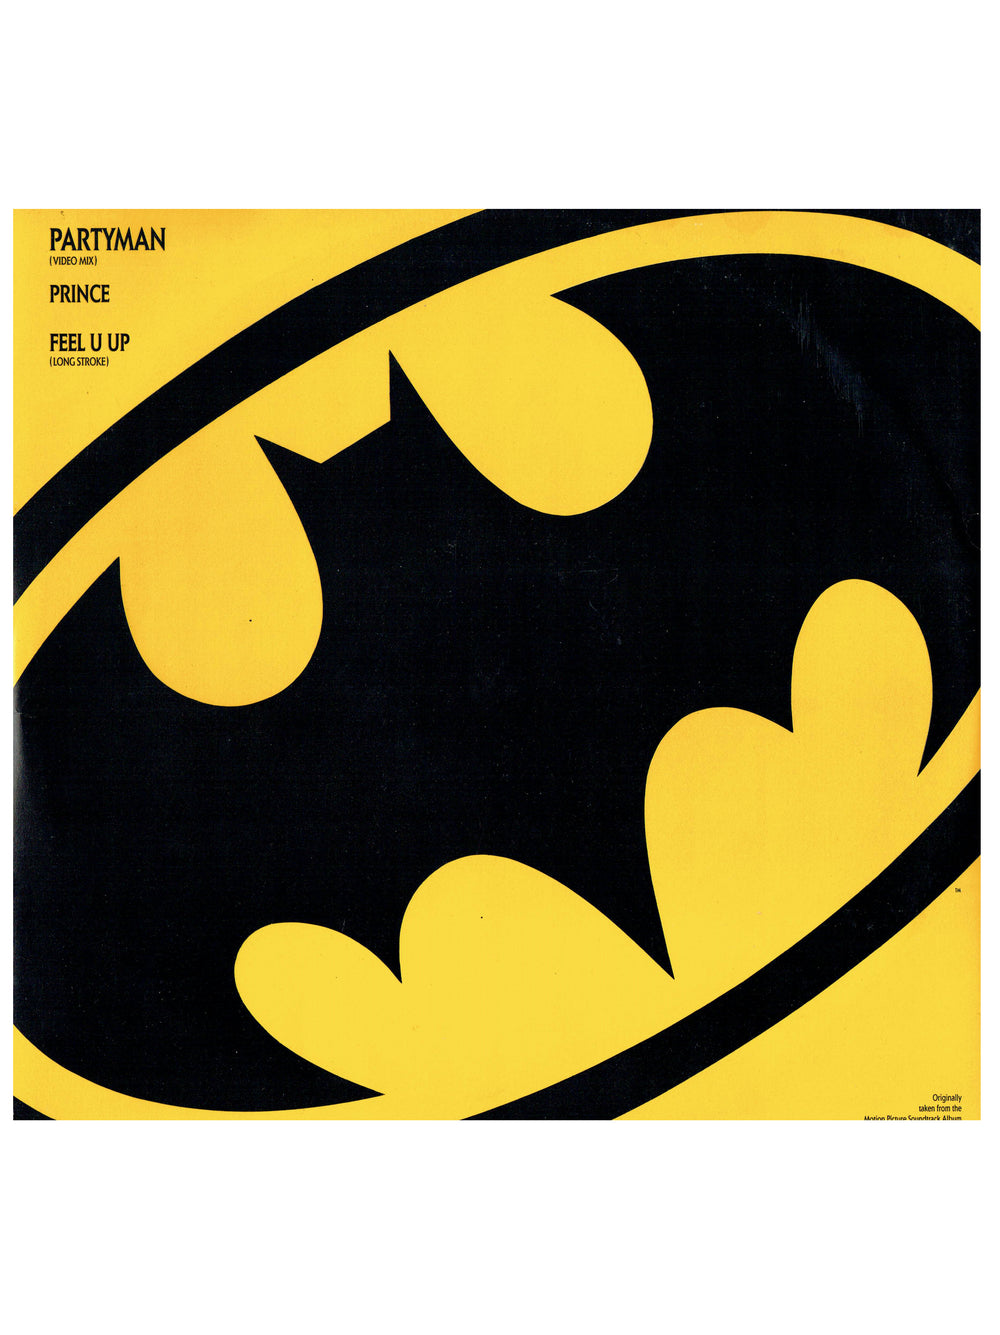 Prince Partyman Feel U Up UK 12 Inch Maxi Single Vinyl 2 Tracks W2814T